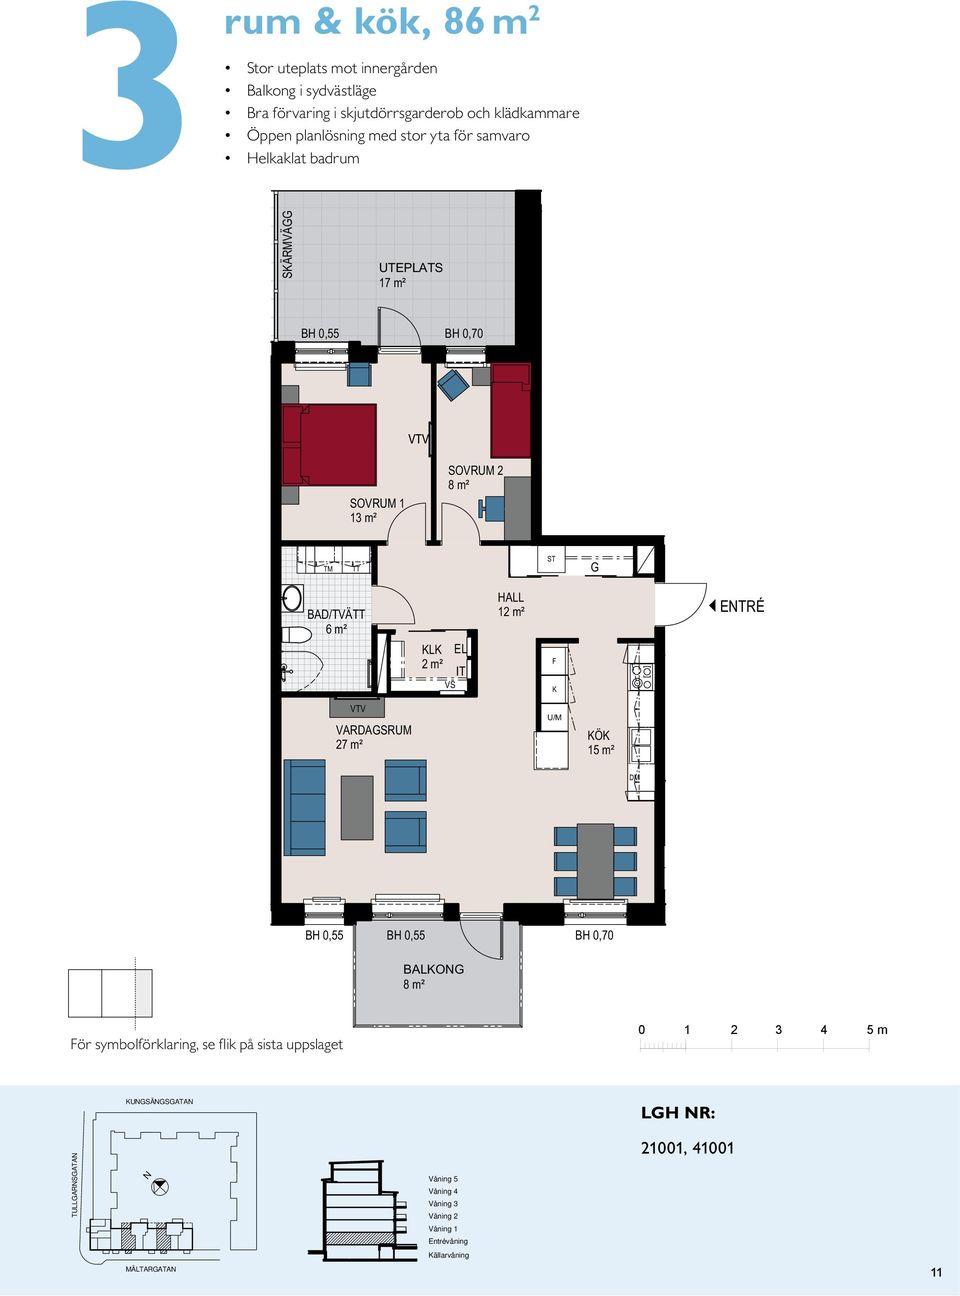 UTEPATS 17 m² 14 m² VS 13 m² 8 m² /TVÄ 6 m² /TVÄ 6 m² E 2 m² IT VS 12 m² ETRÉ VARDASRUM 27 m² PO- BOXAR a